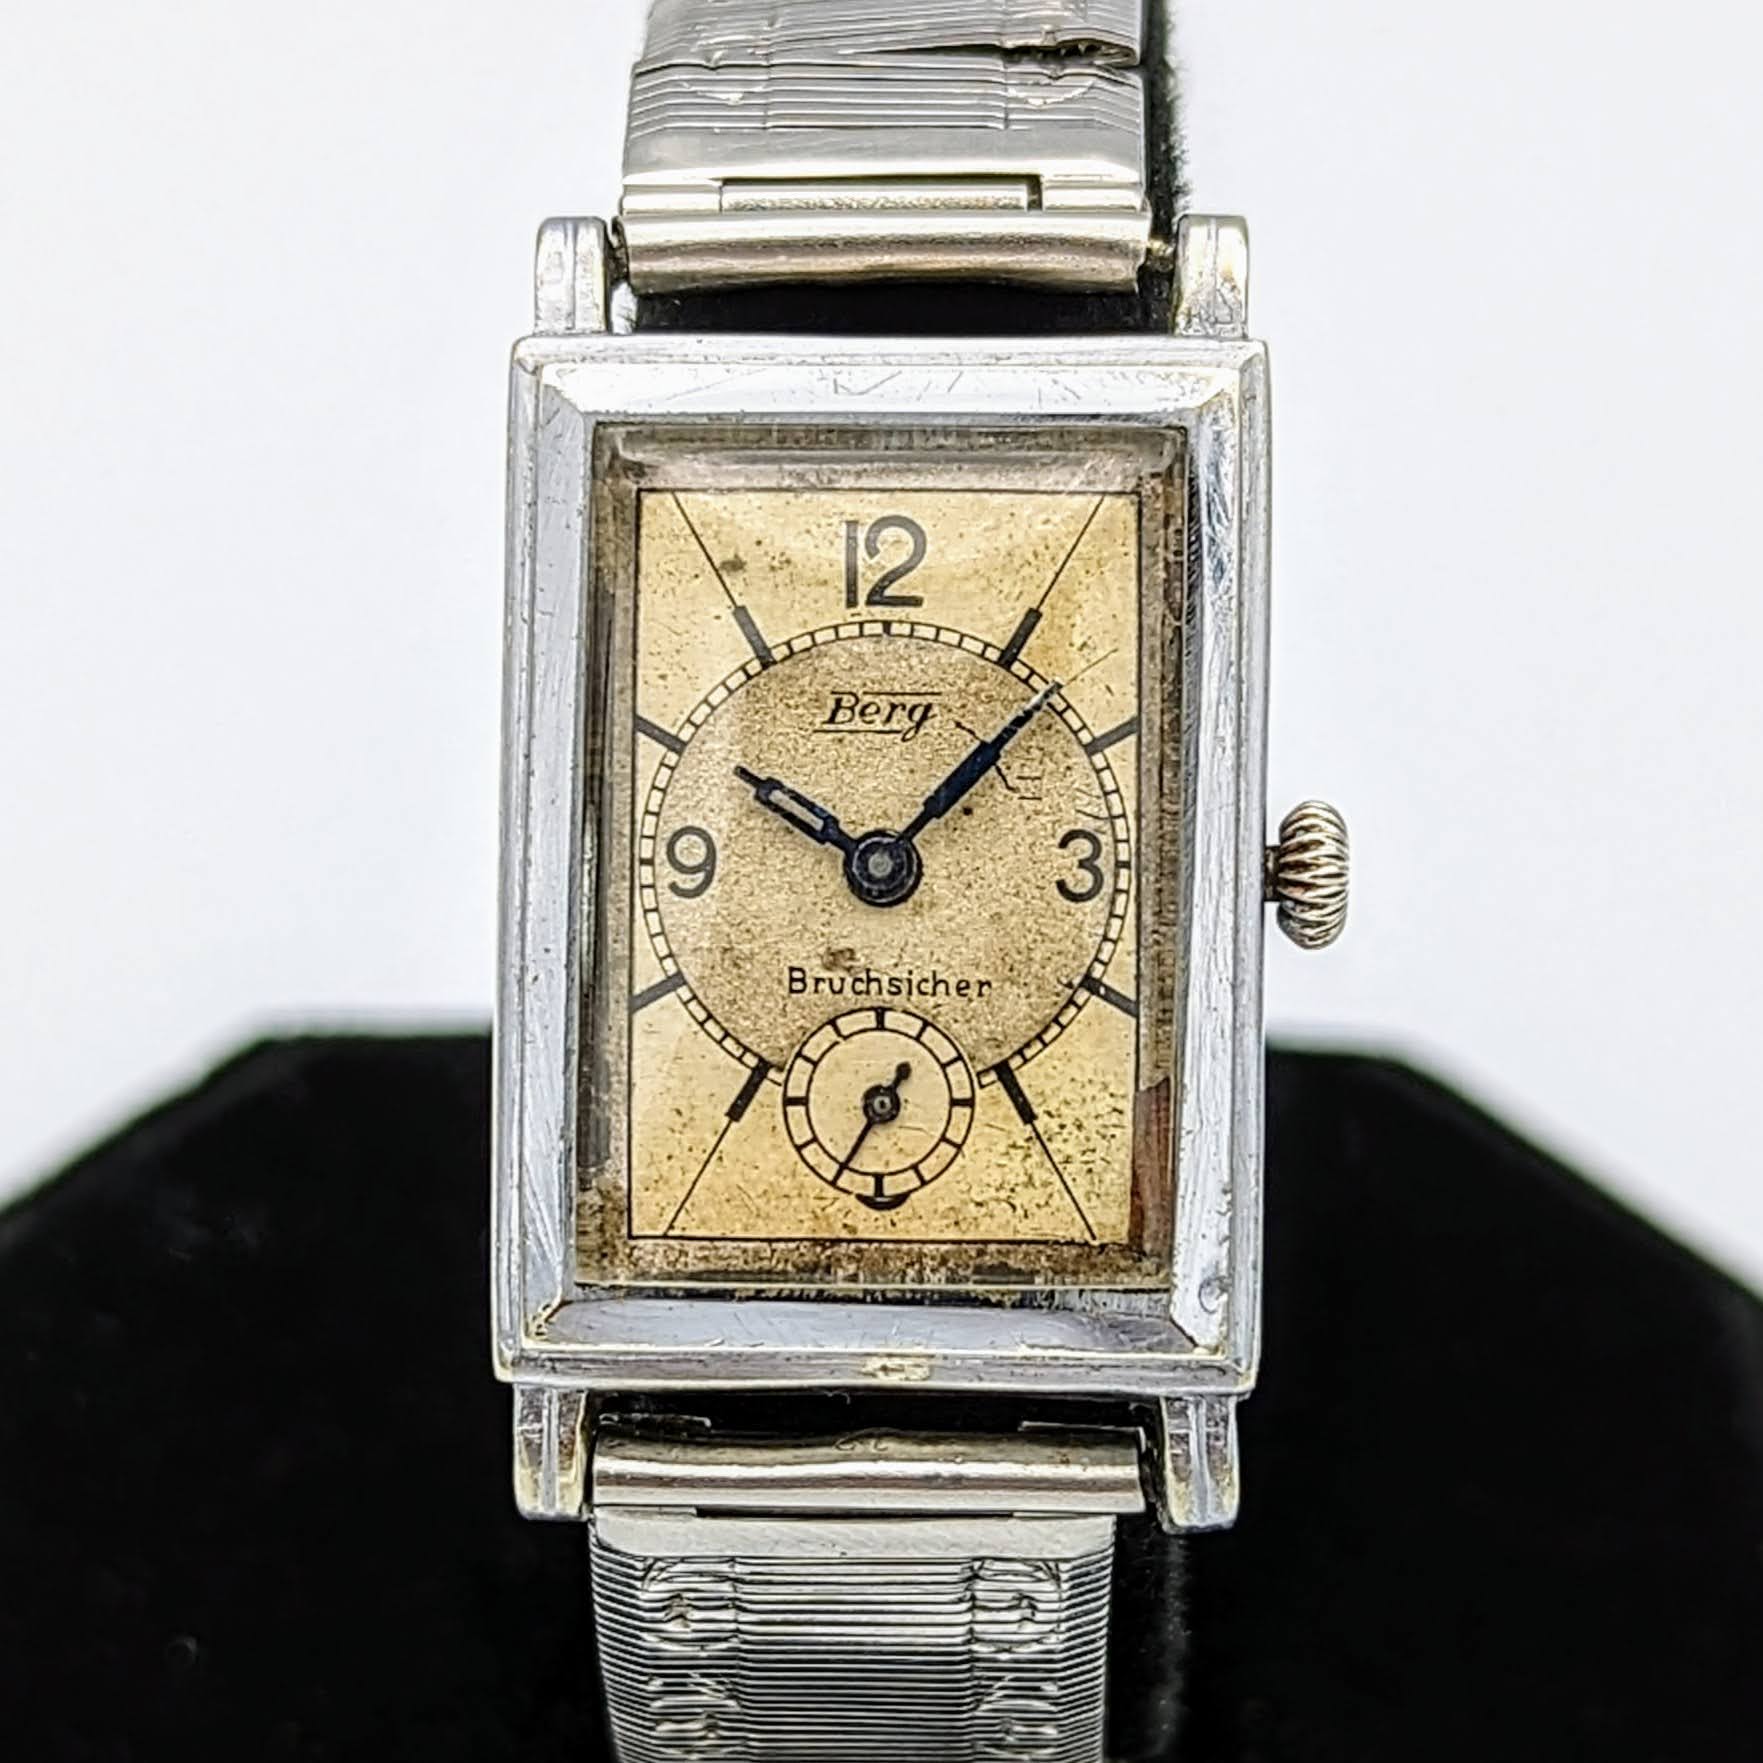 Berg Bruchsicher Wristwatch Late 1930s to Mid 1940s Stainless Steel Watch